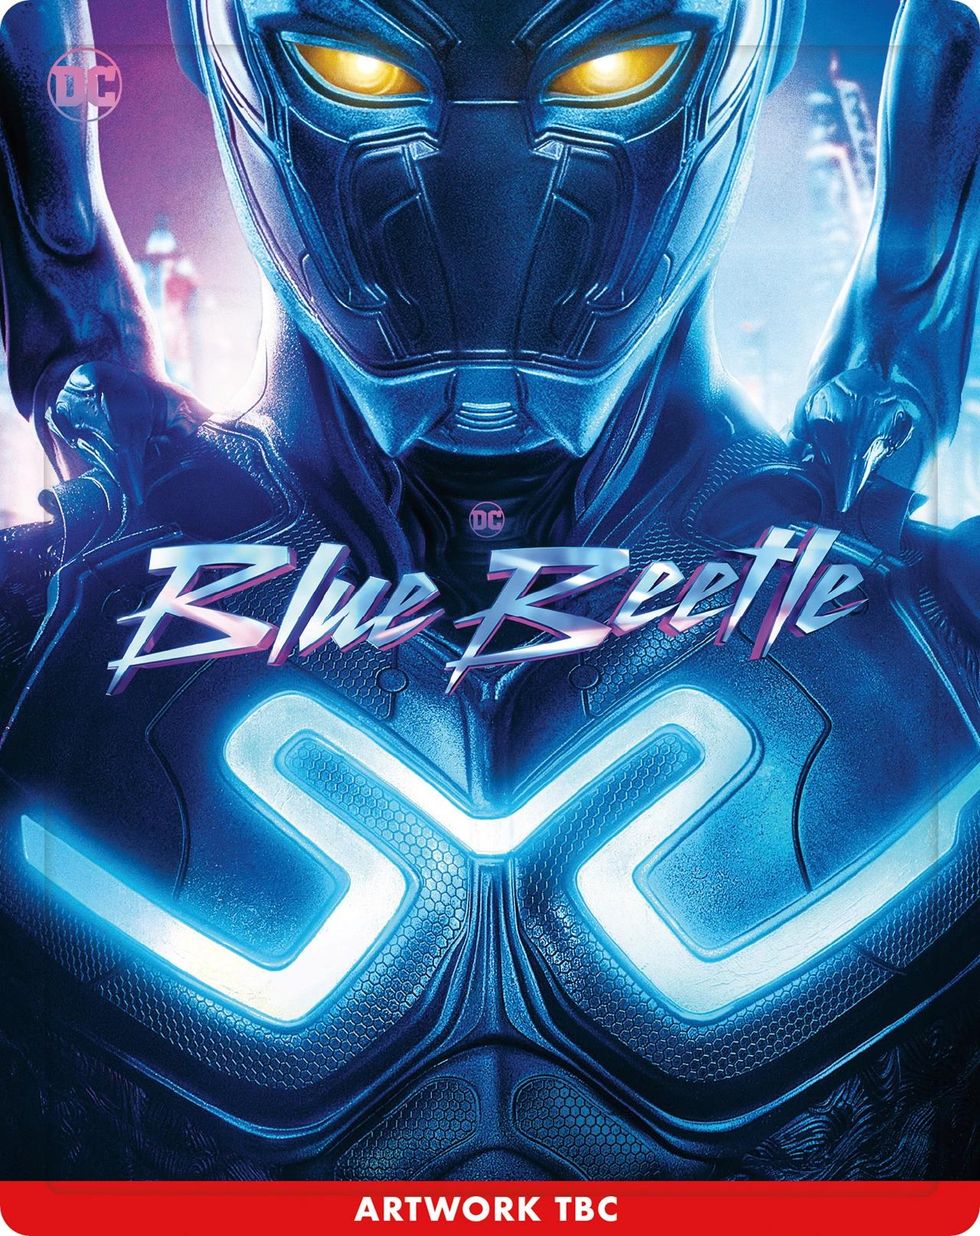 Blue Beetle 4K, Blu-ray and Digital Release Dates Set